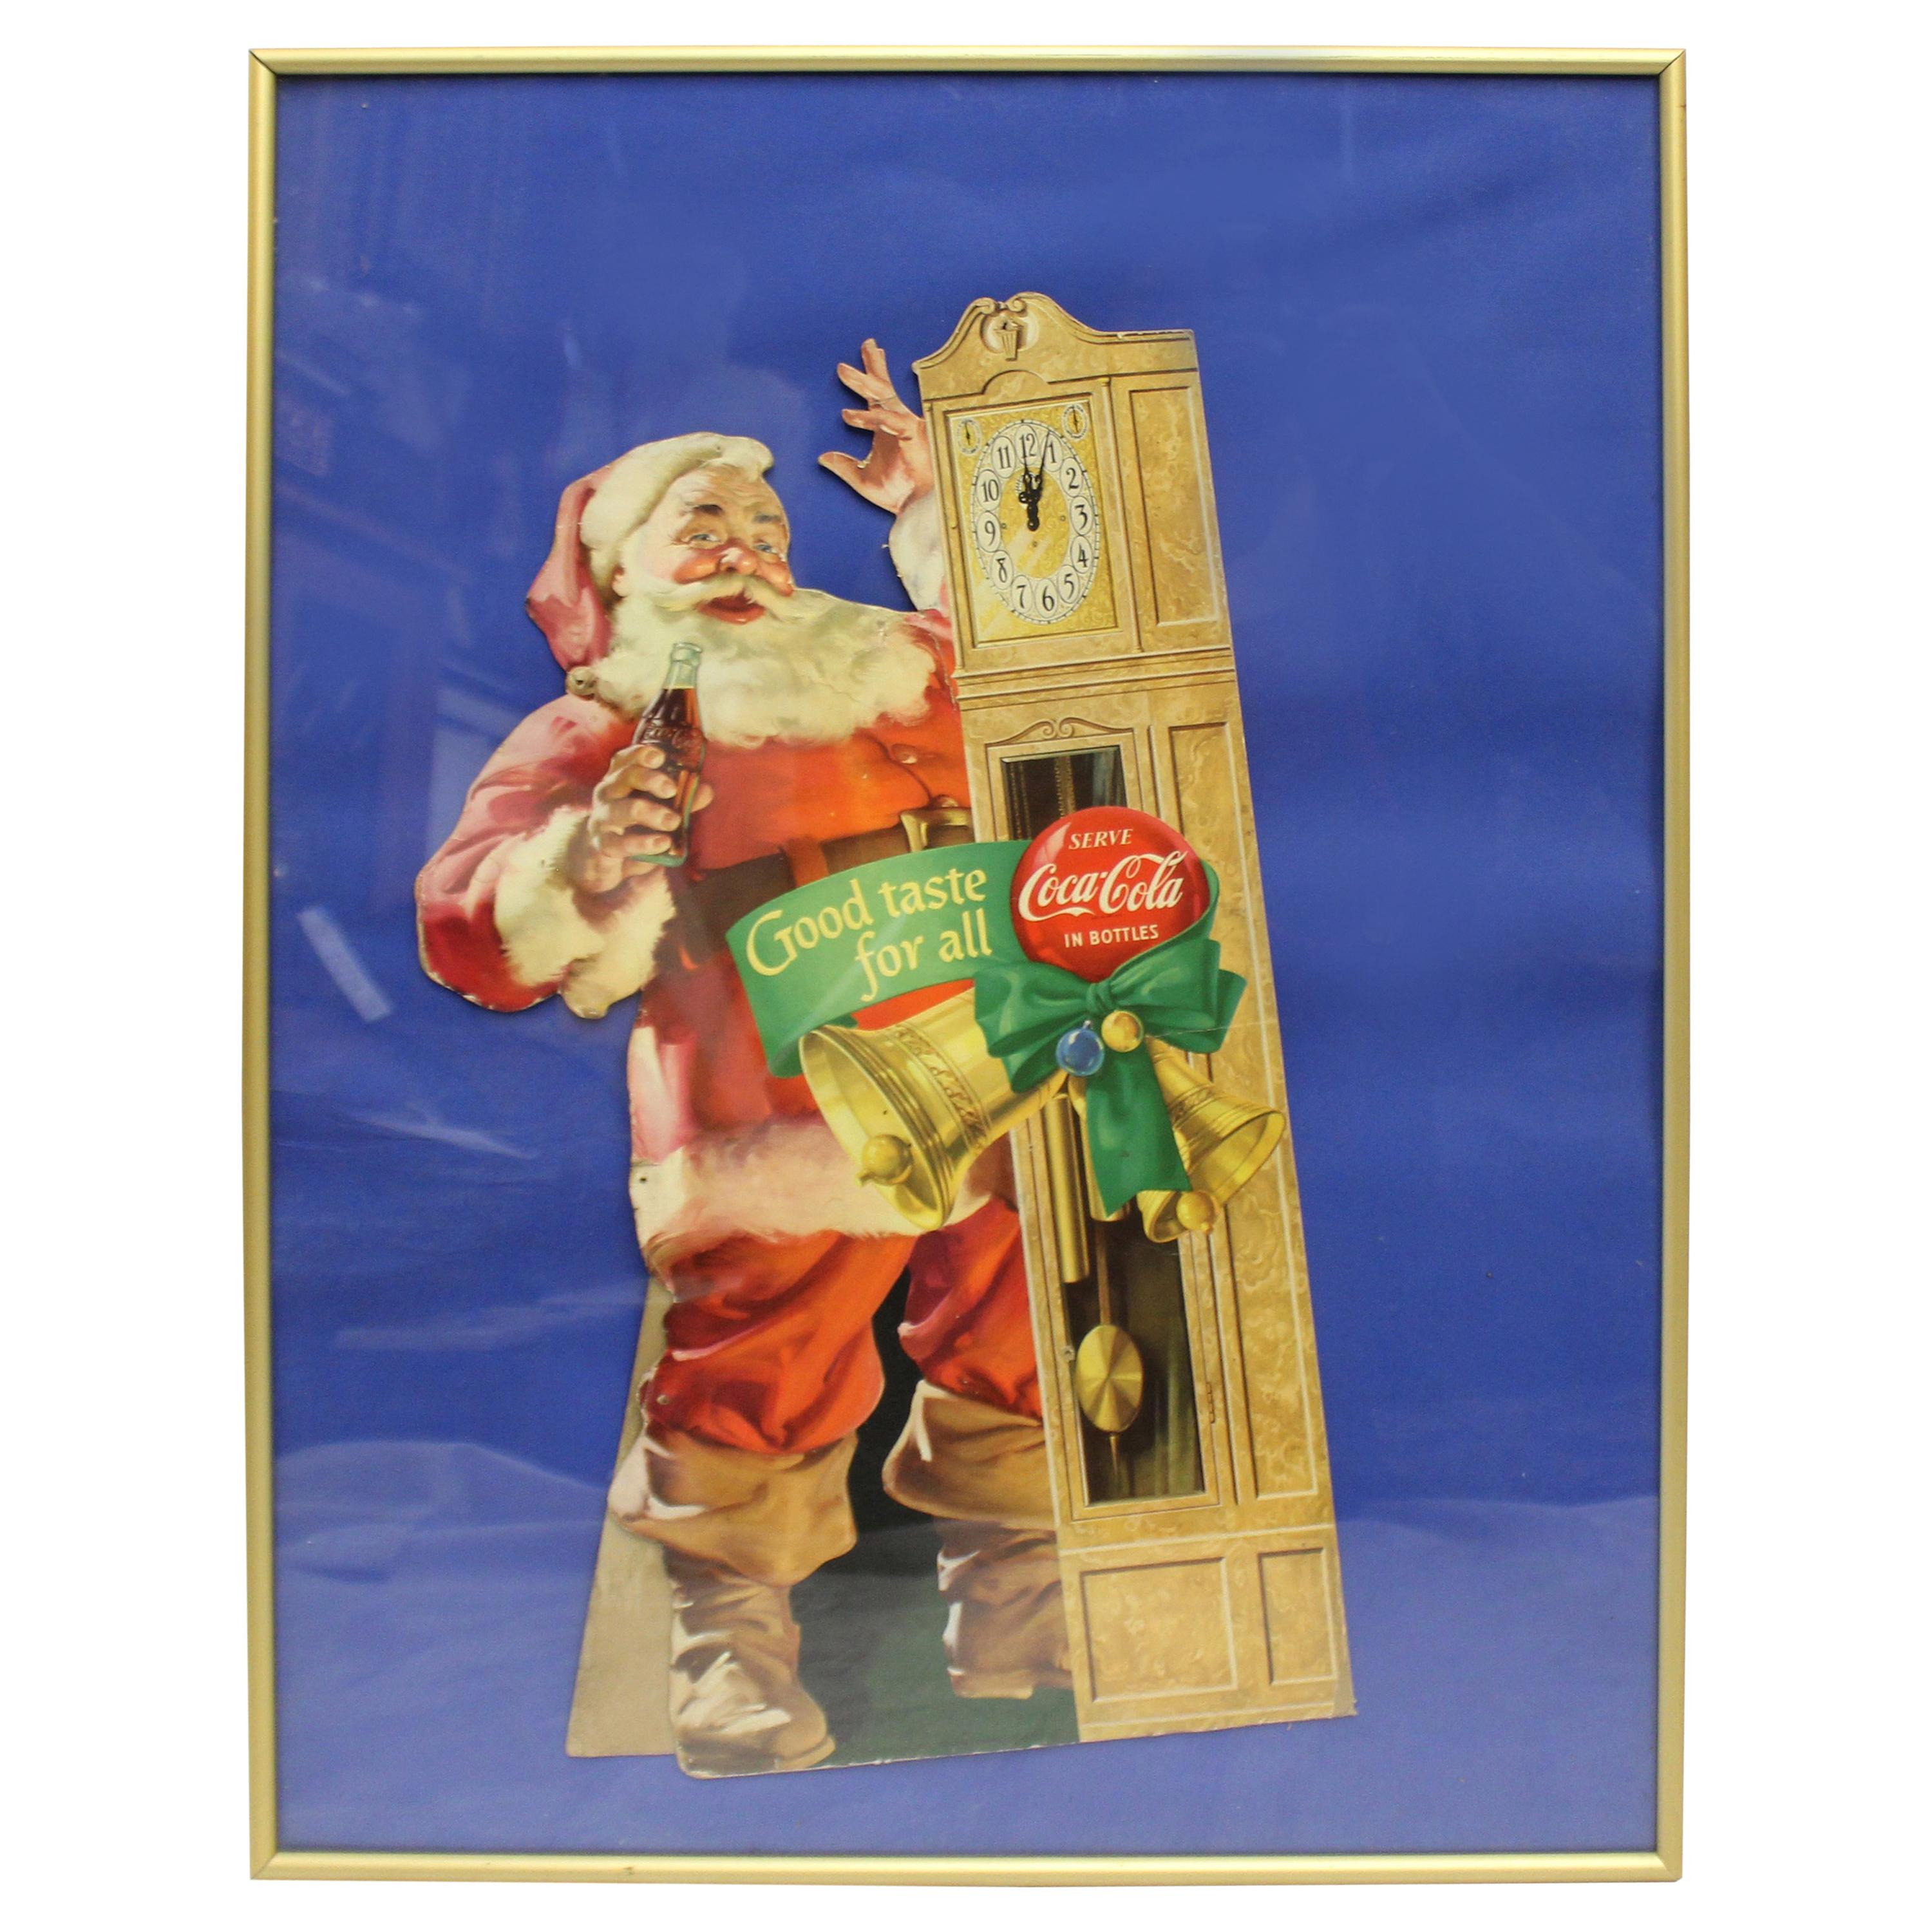 1954 Original Coca-Cola Santa Cardboard Cut-Out Advertising Framed For Sale